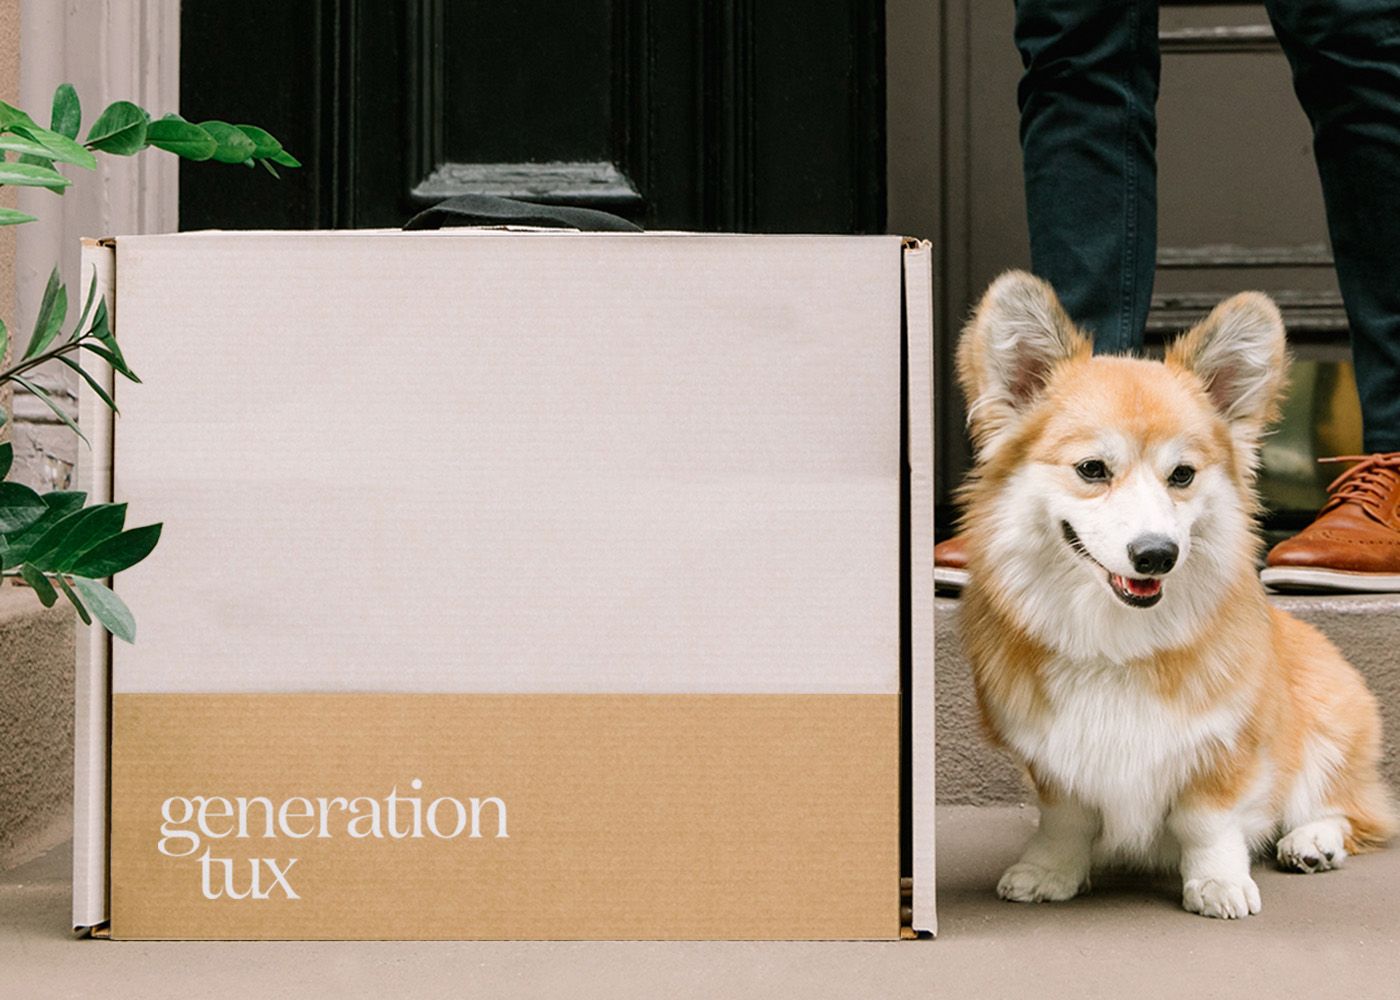 A generation tux box and a corgi 